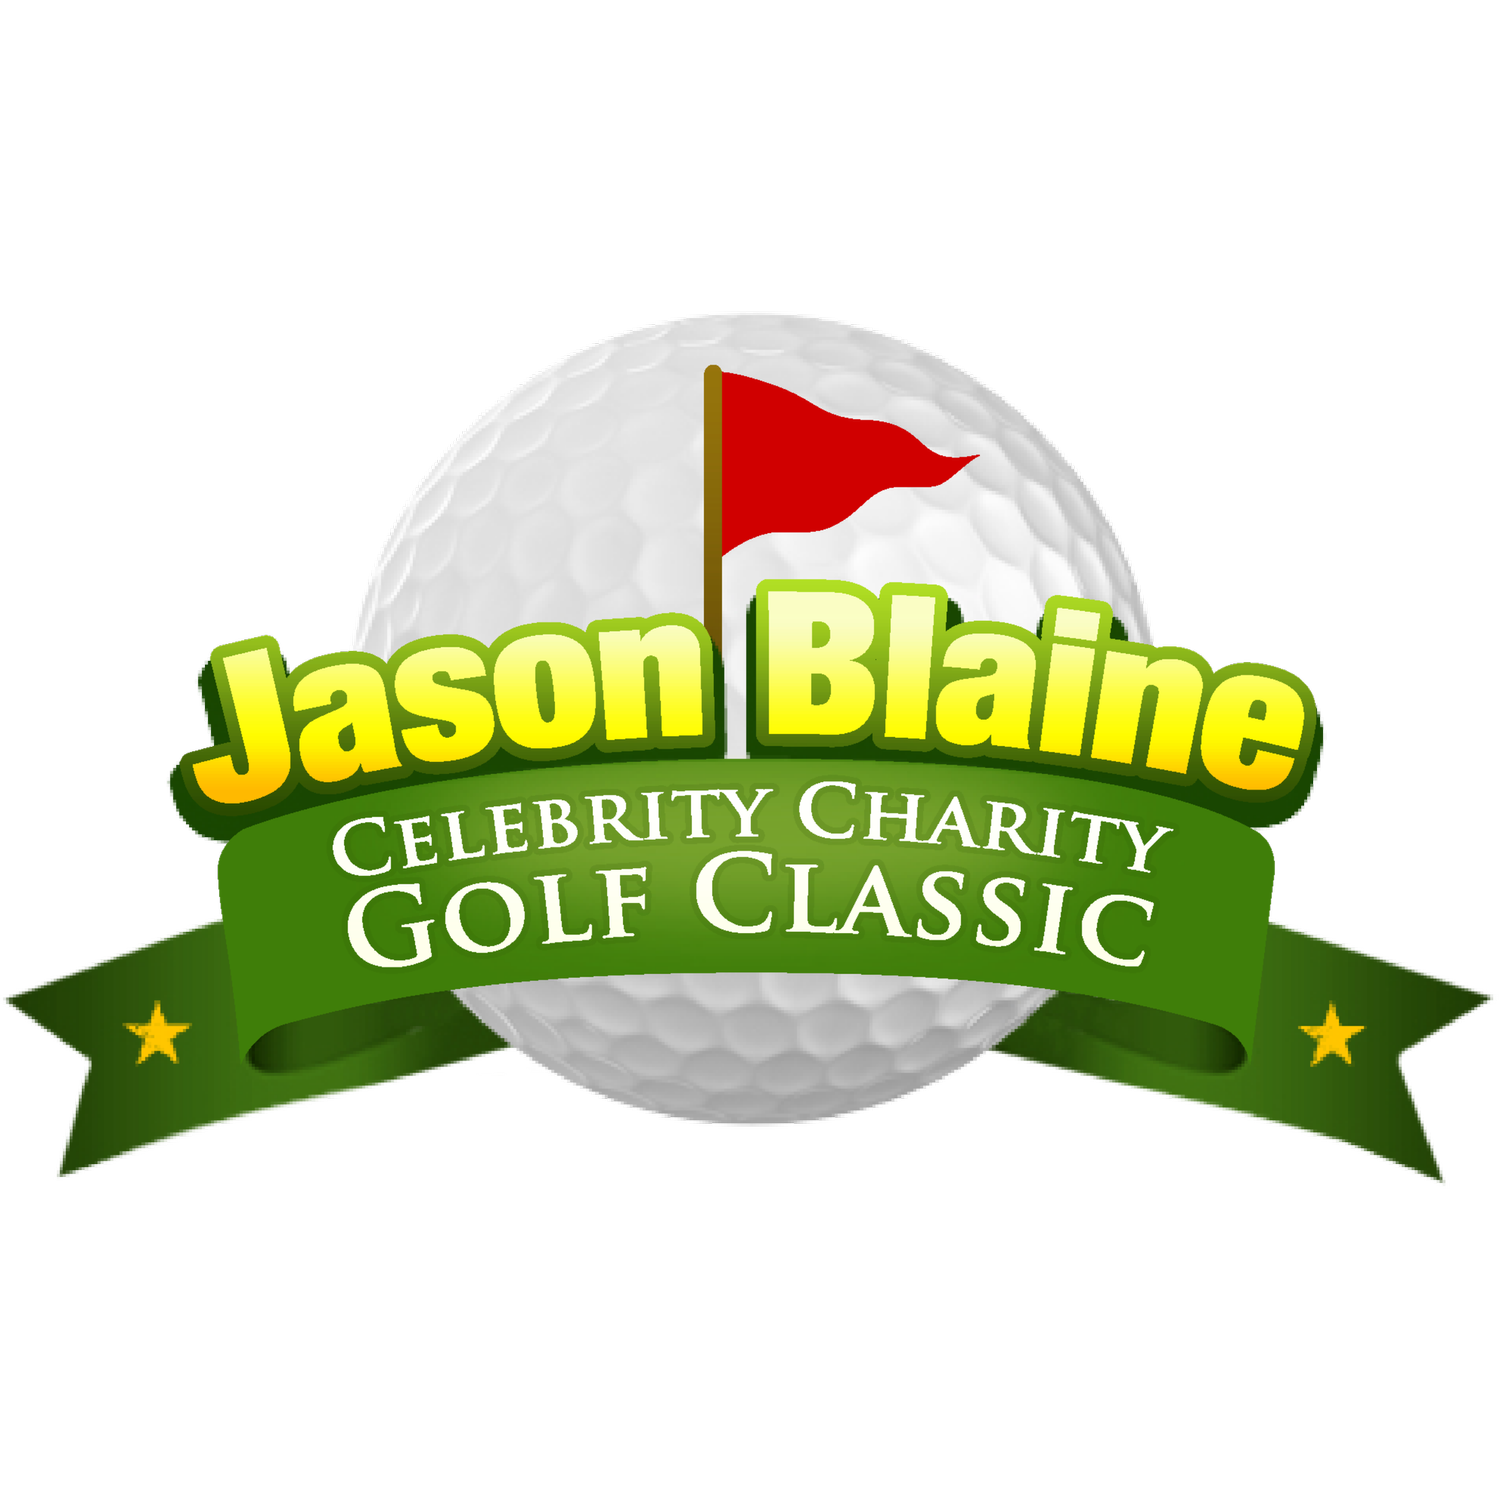 Jason Blaine Celebrity Charity Golf Classic